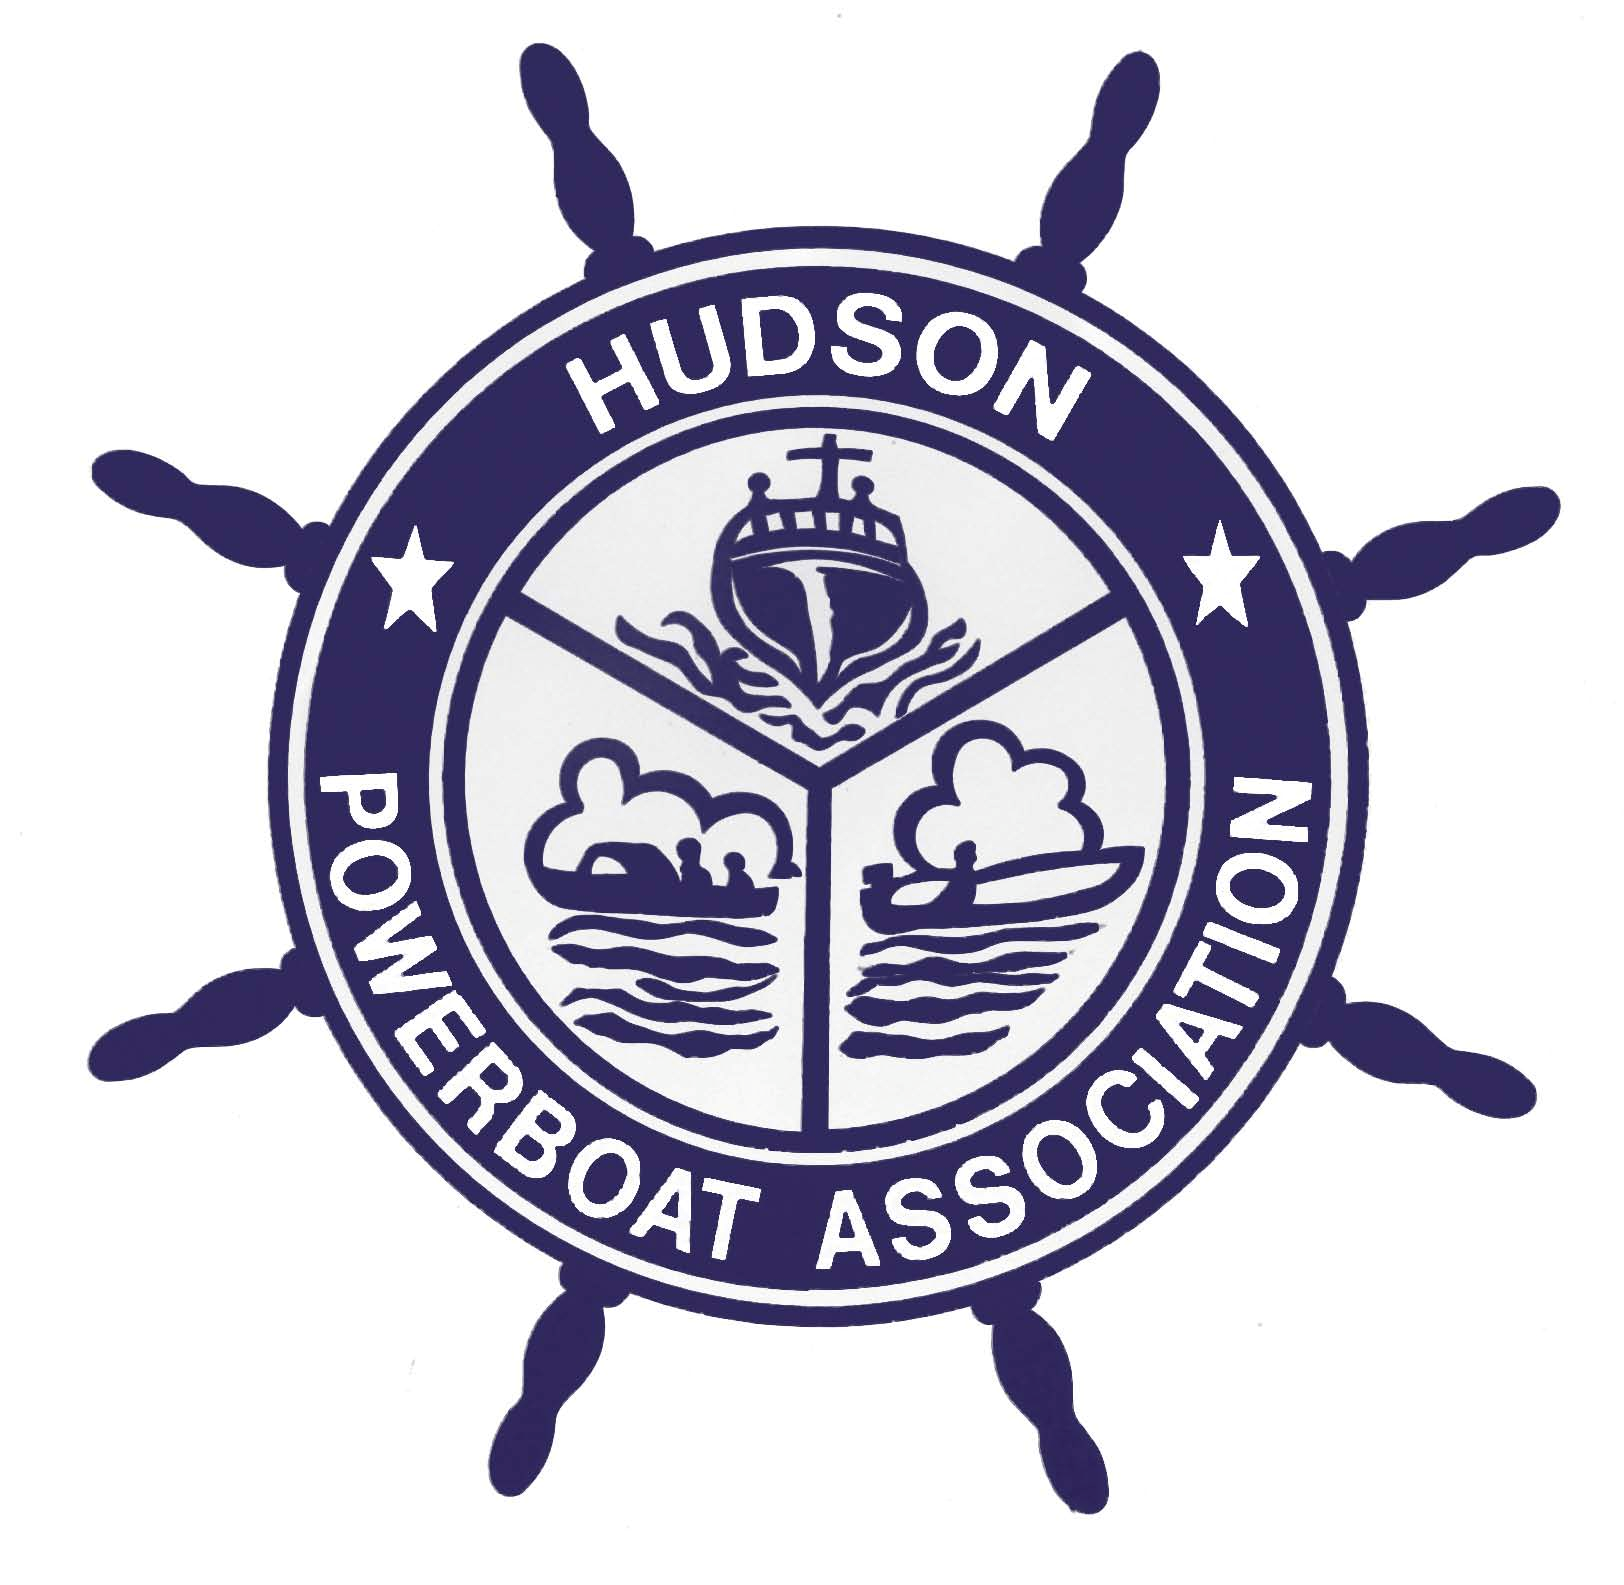 Hudson Power Boat Association